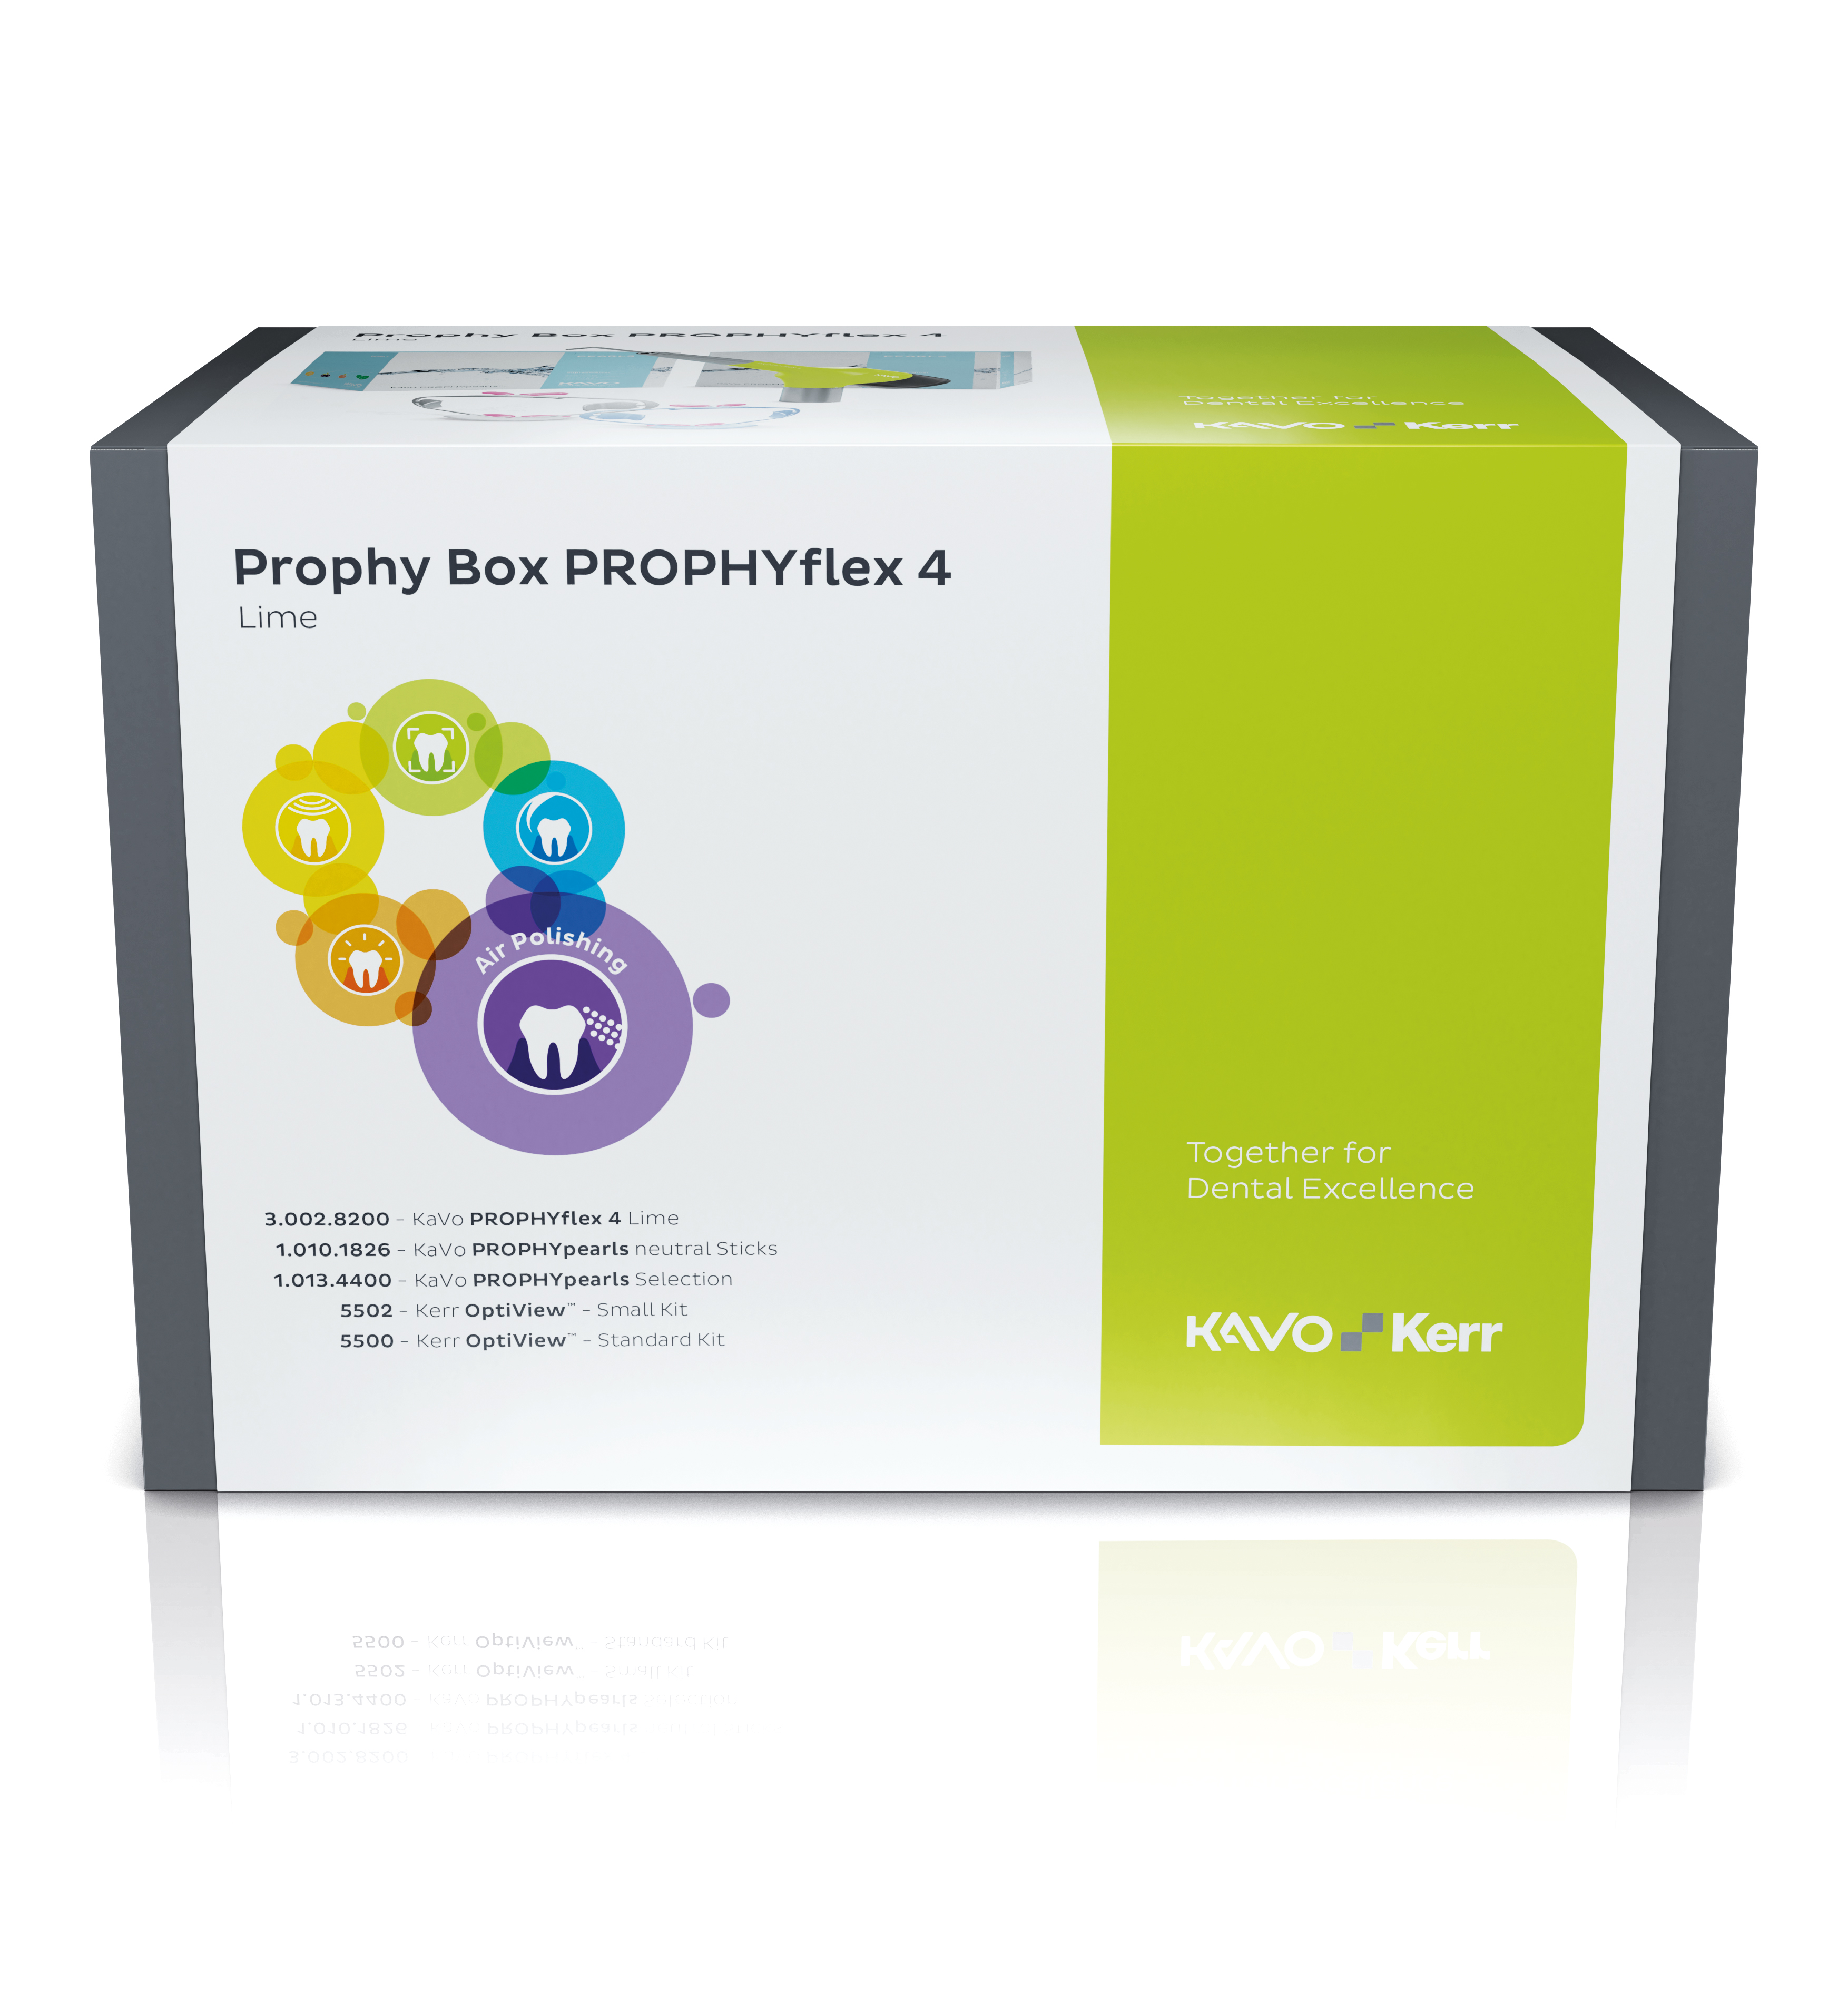 KaVo Prophy Box PROPHYflex 4 Lime, Pulverstrahl-Handy - Aktions-Set  -  160 Sticks Pulver & 2x Kerr OptiView Kit | Art.Nr.: 10135079